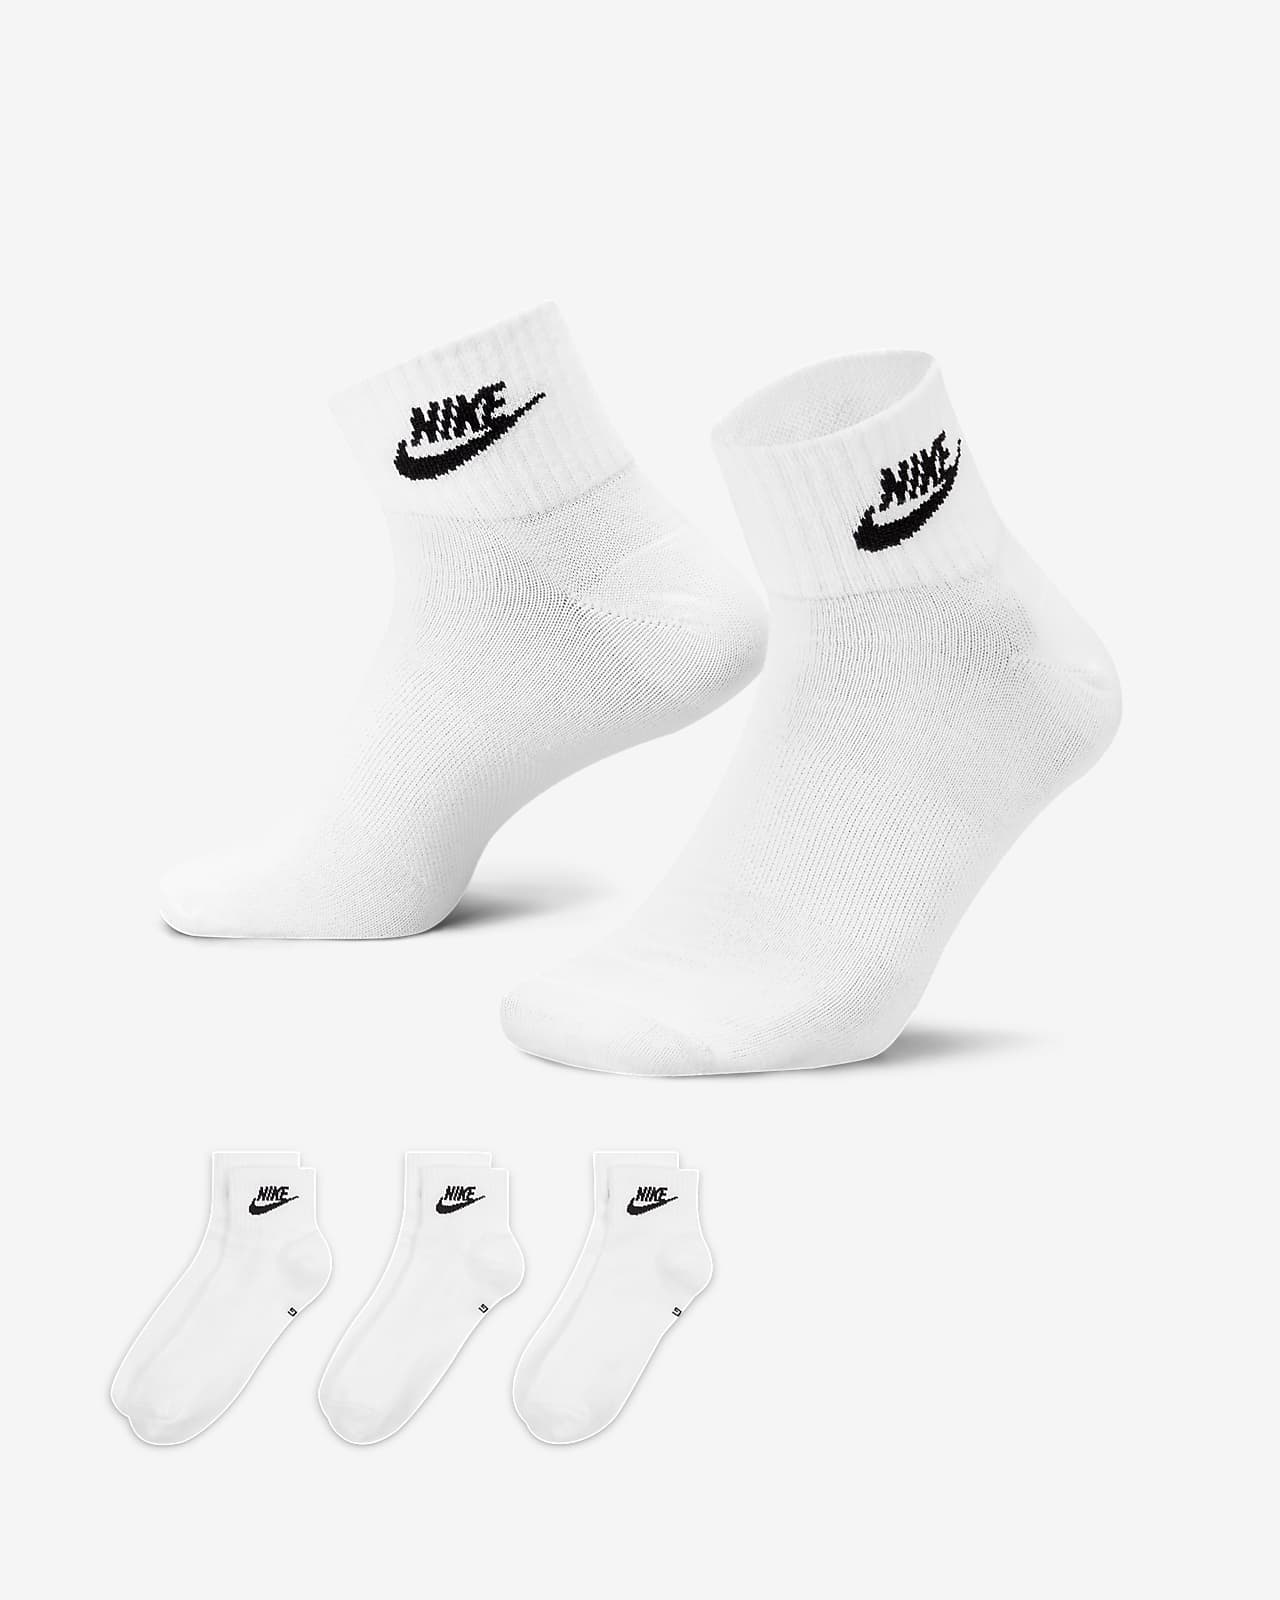 Boys Black Dance Socks. Nike UK